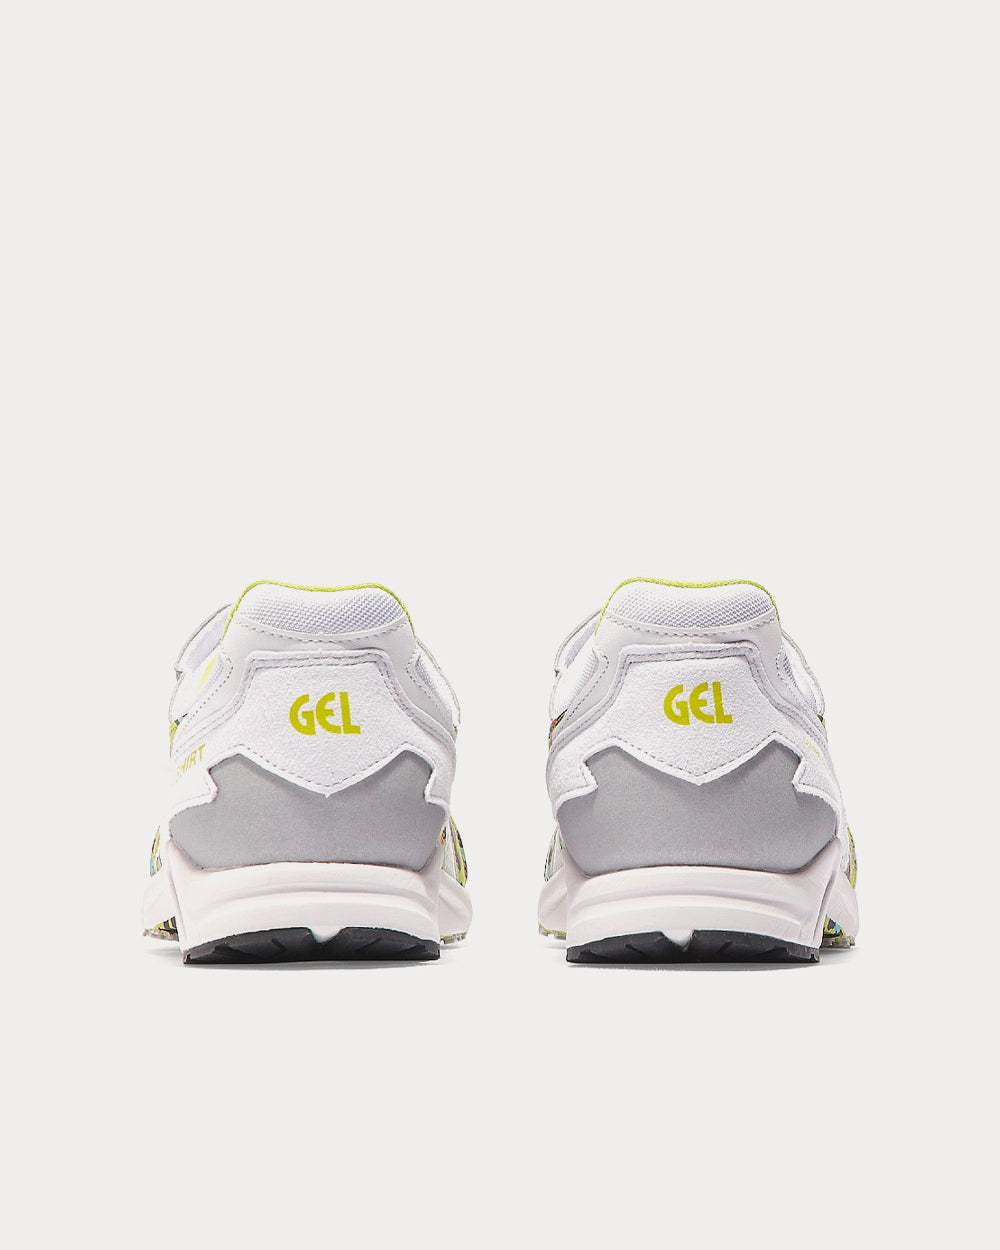 Asics x CDG Shirt - White / Yellow Low Top Sneakers